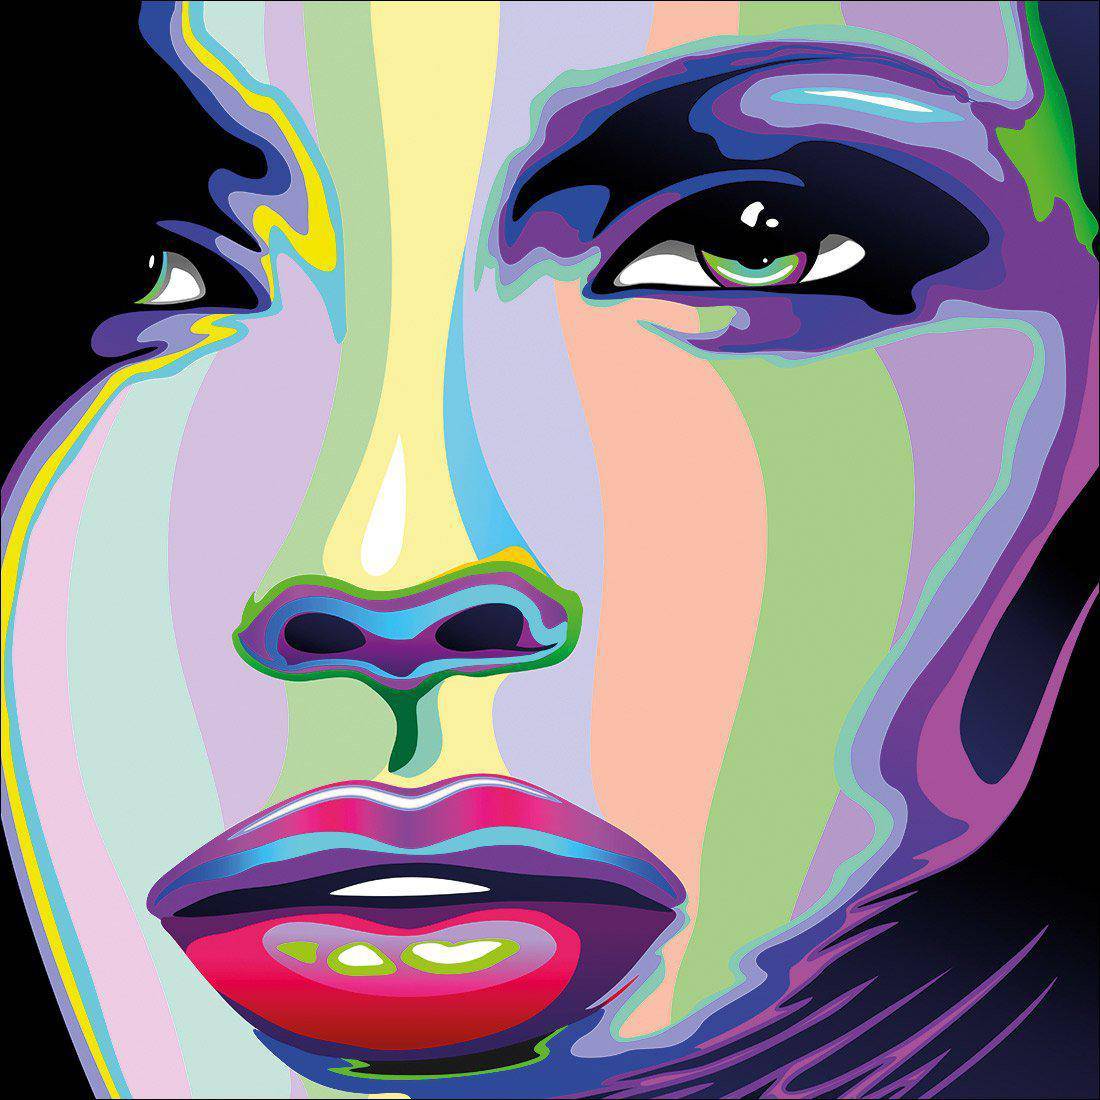 Electric Face Canvas Art-Canvas-Wall Art Designs-30x30cm-Canvas - No Frame-Wall Art Designs